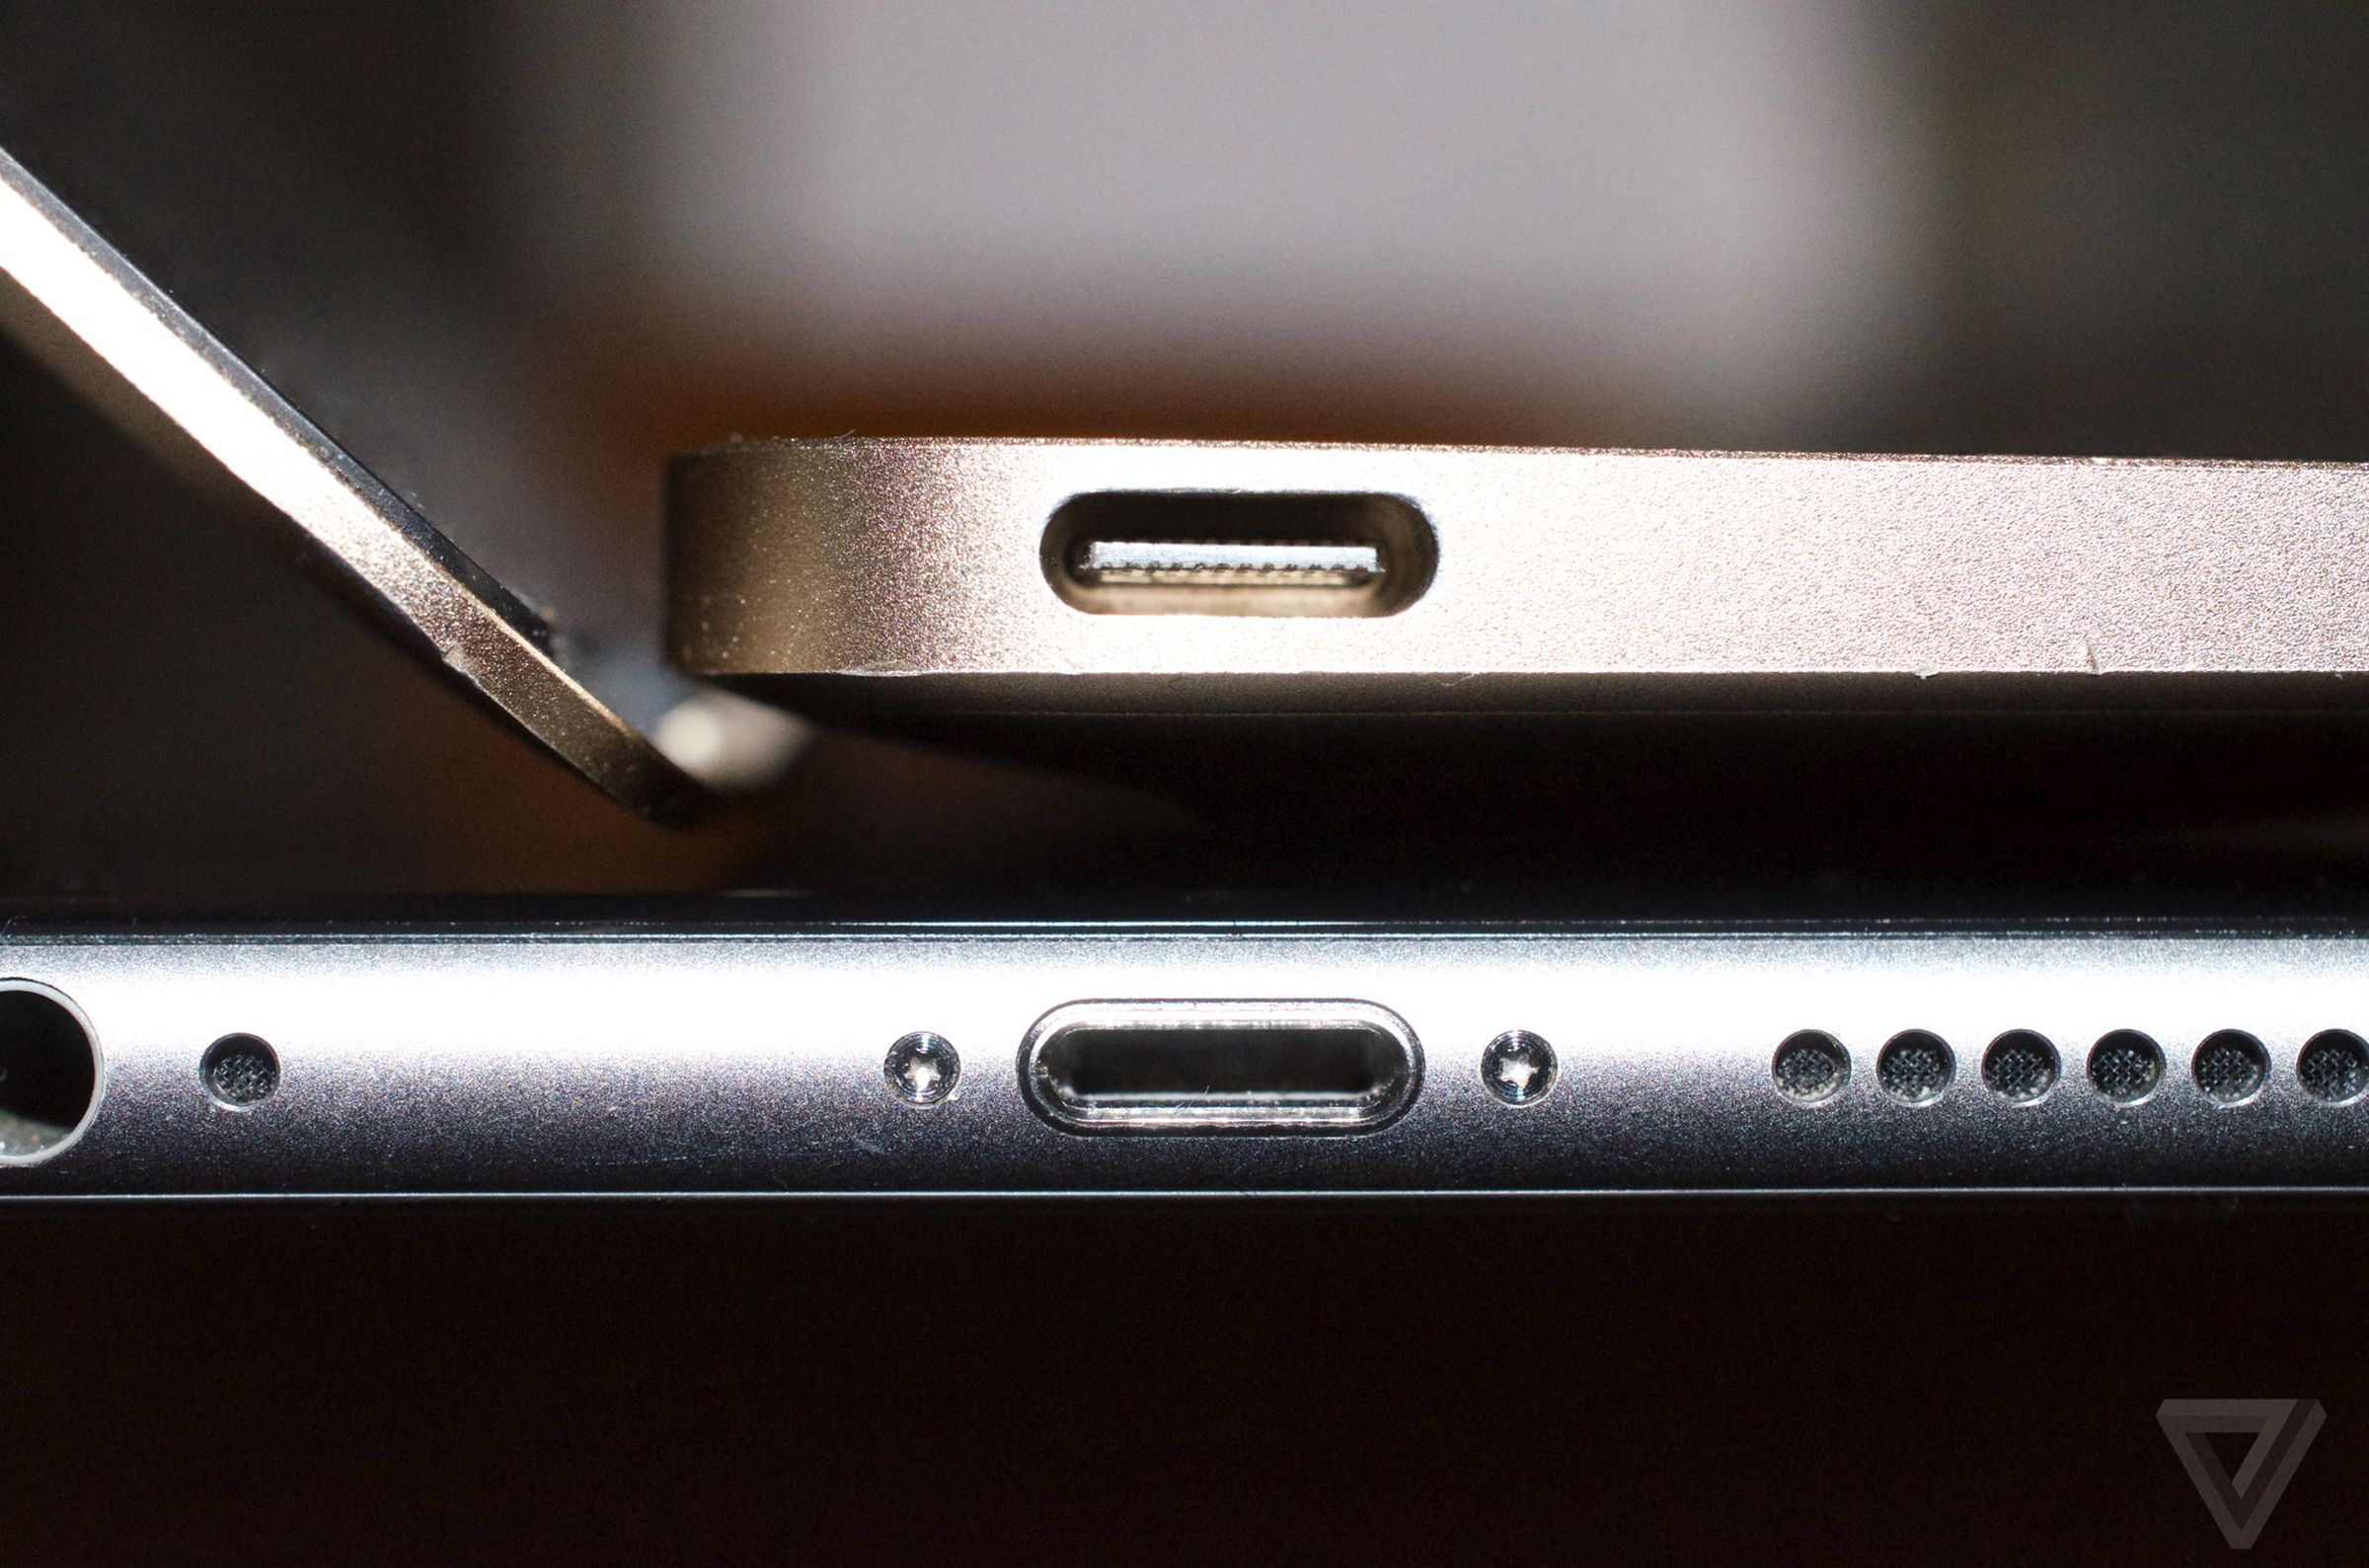 MacBook USB-C (top) vs. iPhone Lightning (bottom).